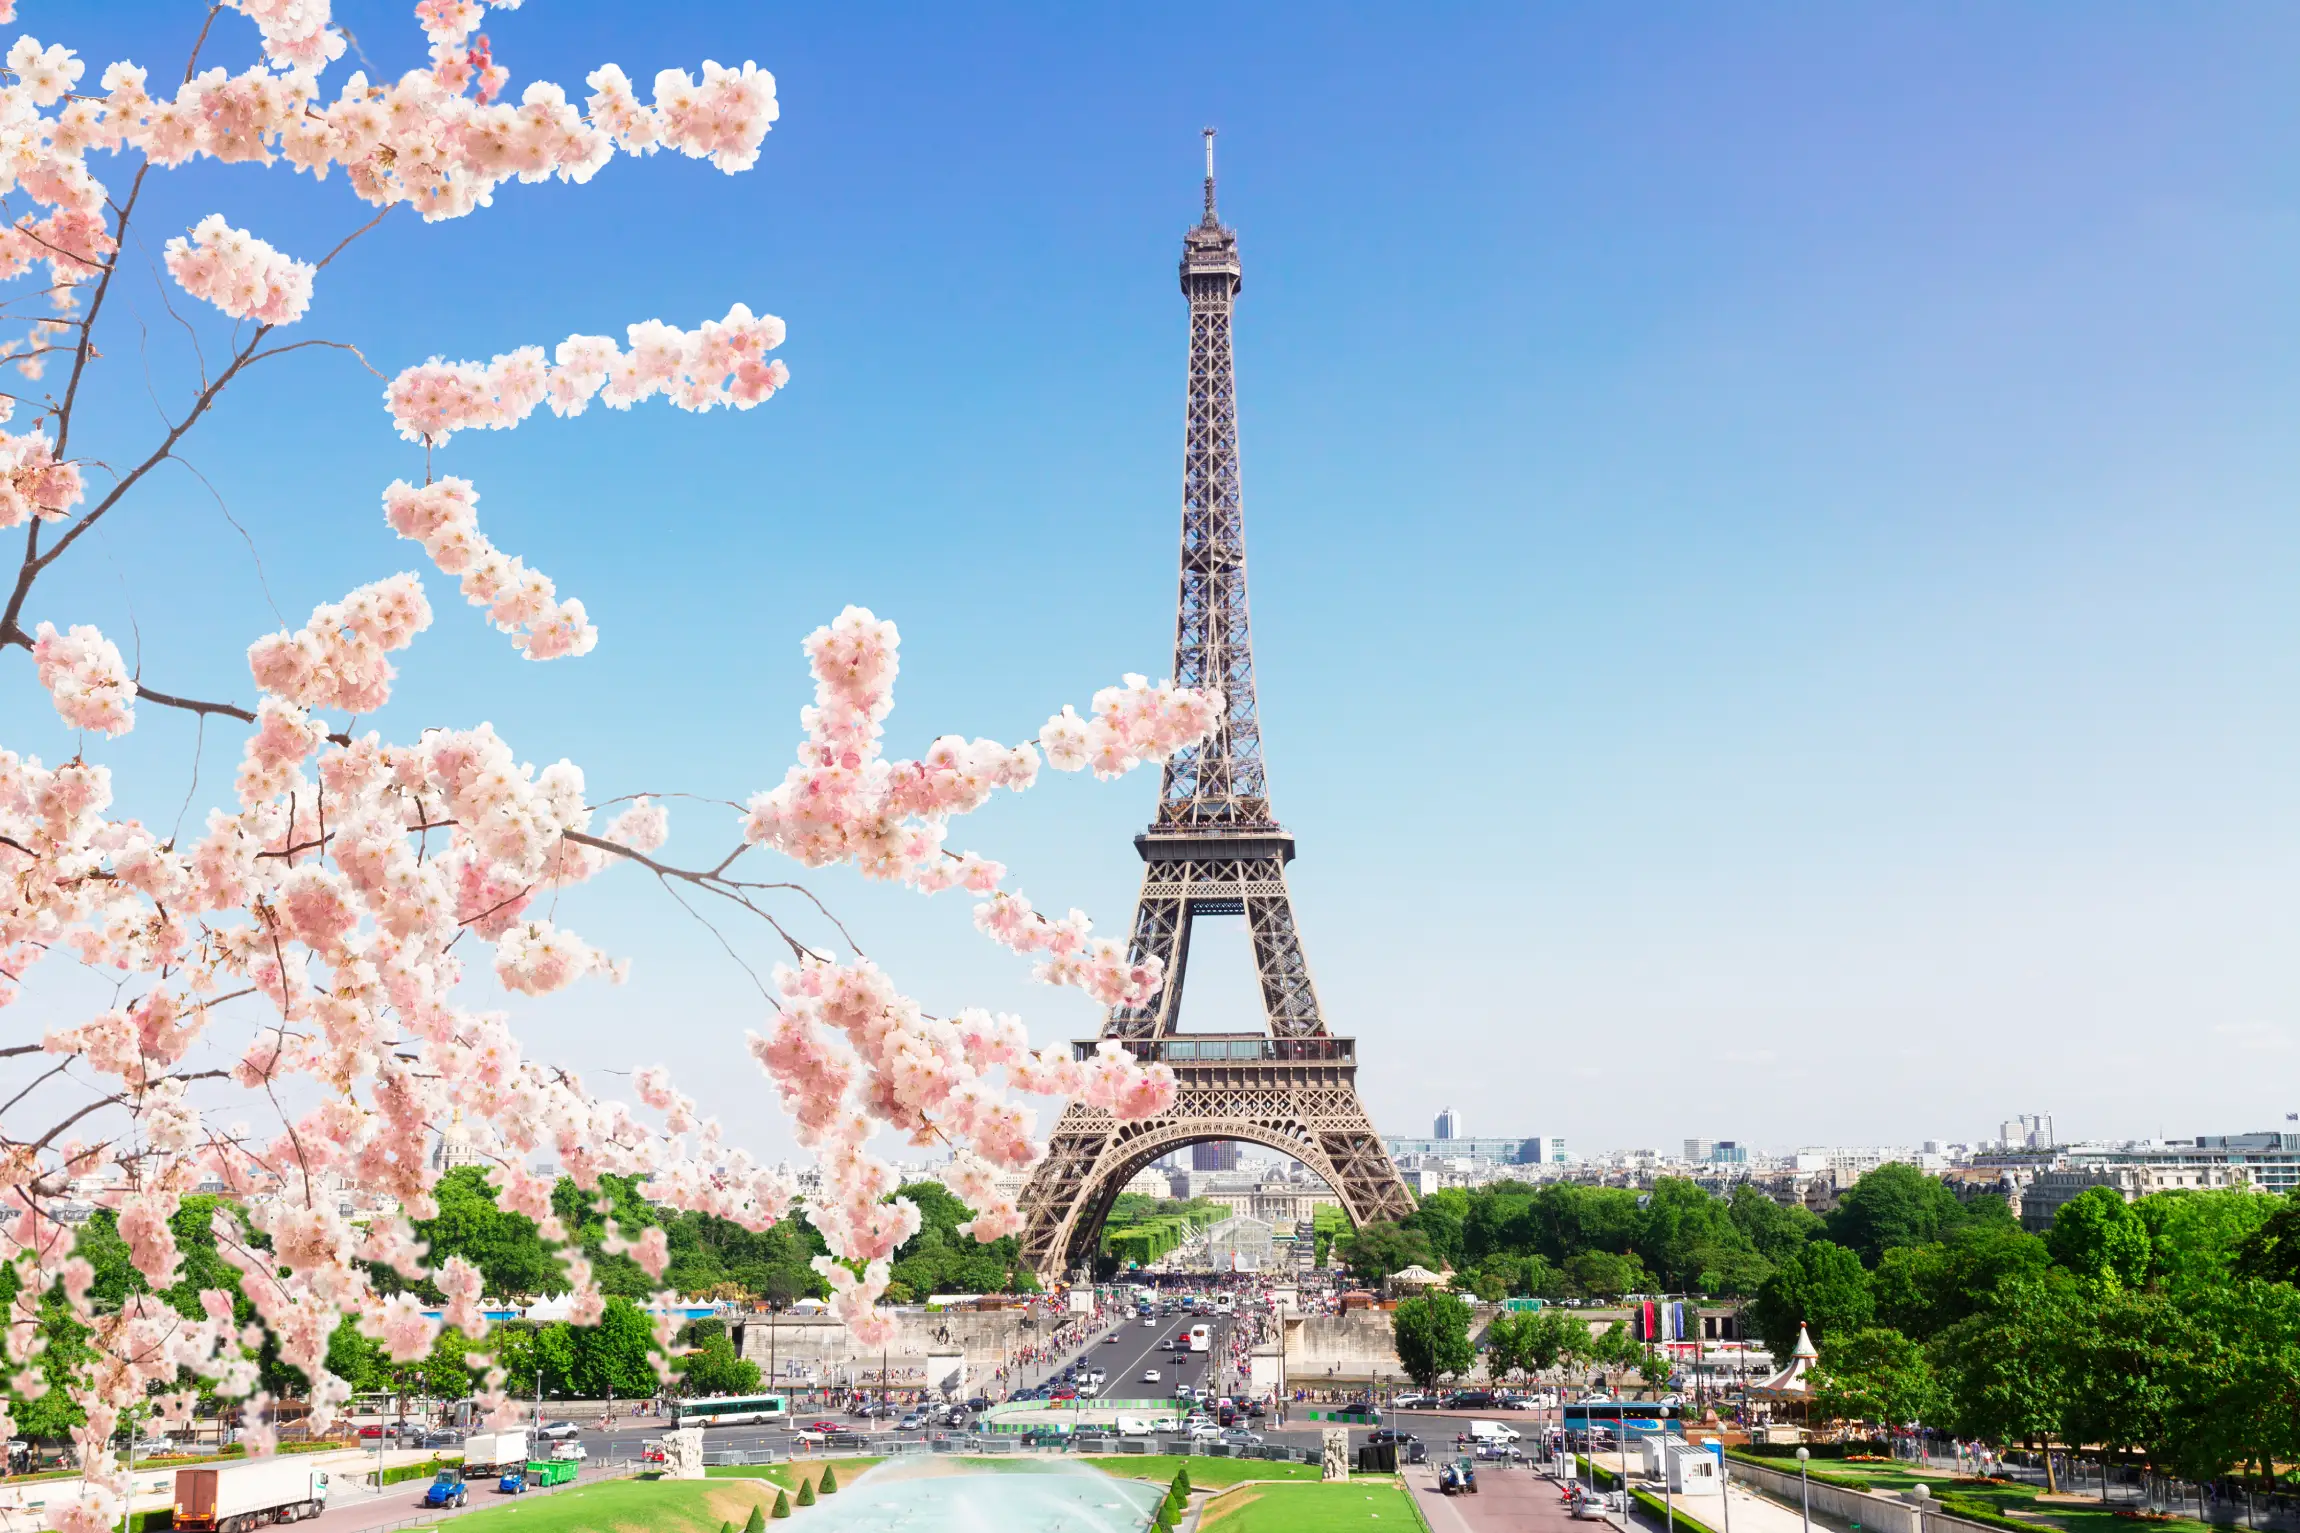 Explore Paris in style with Paris Tours Cab